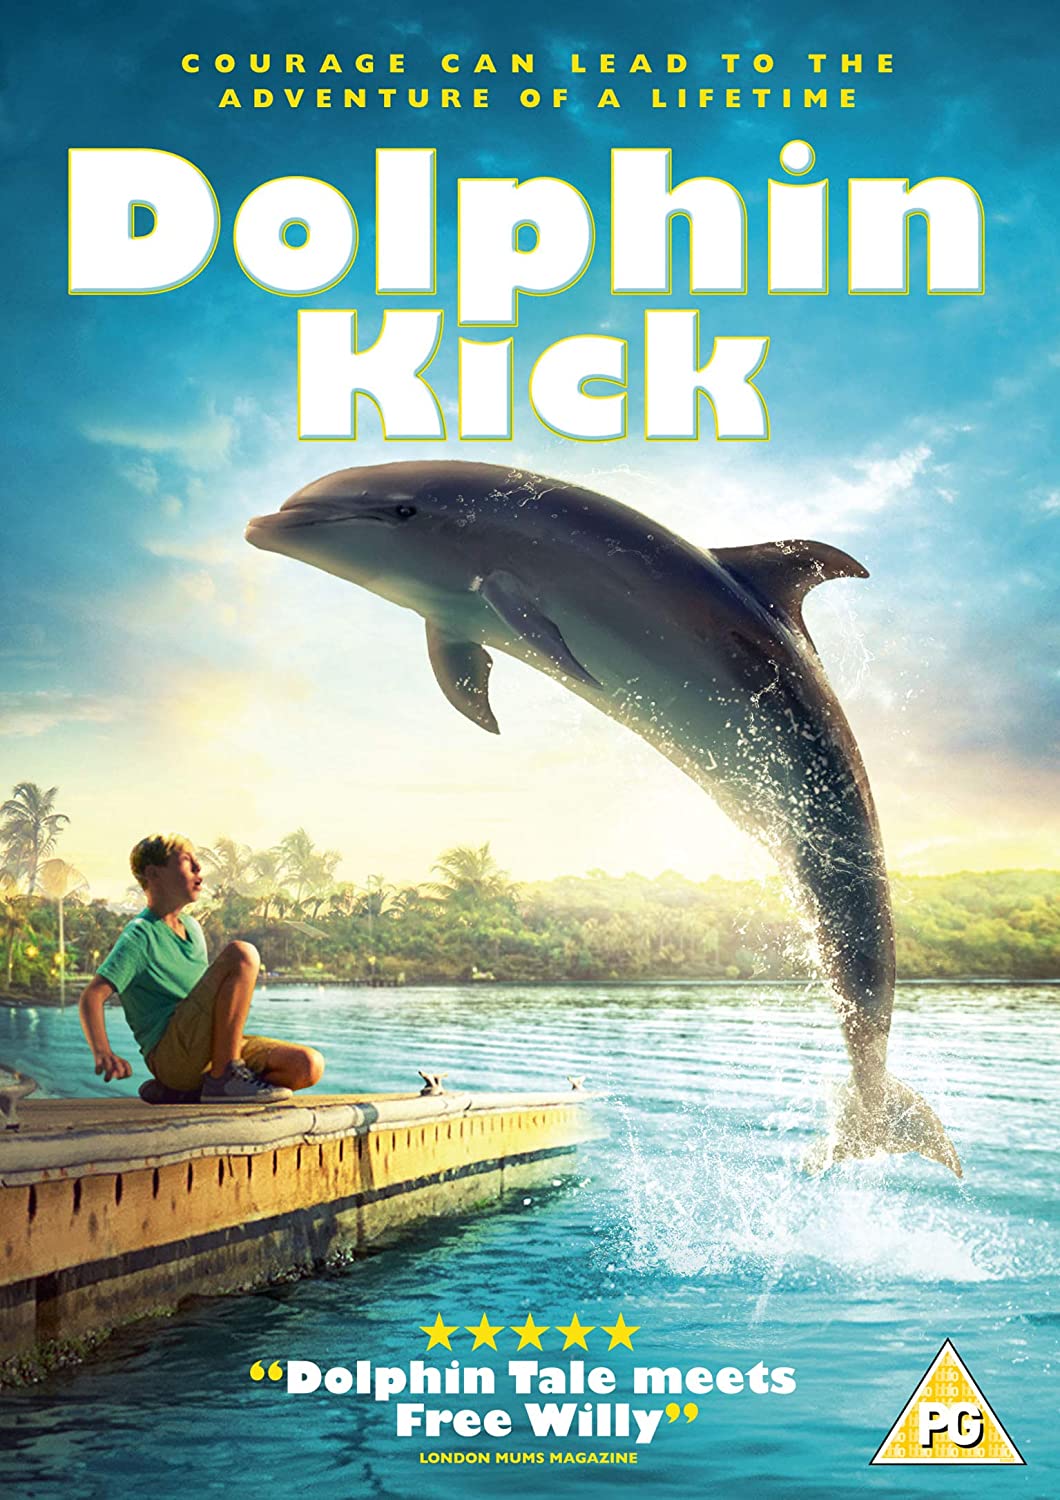 Dolphin Kick - Drama [DVD]